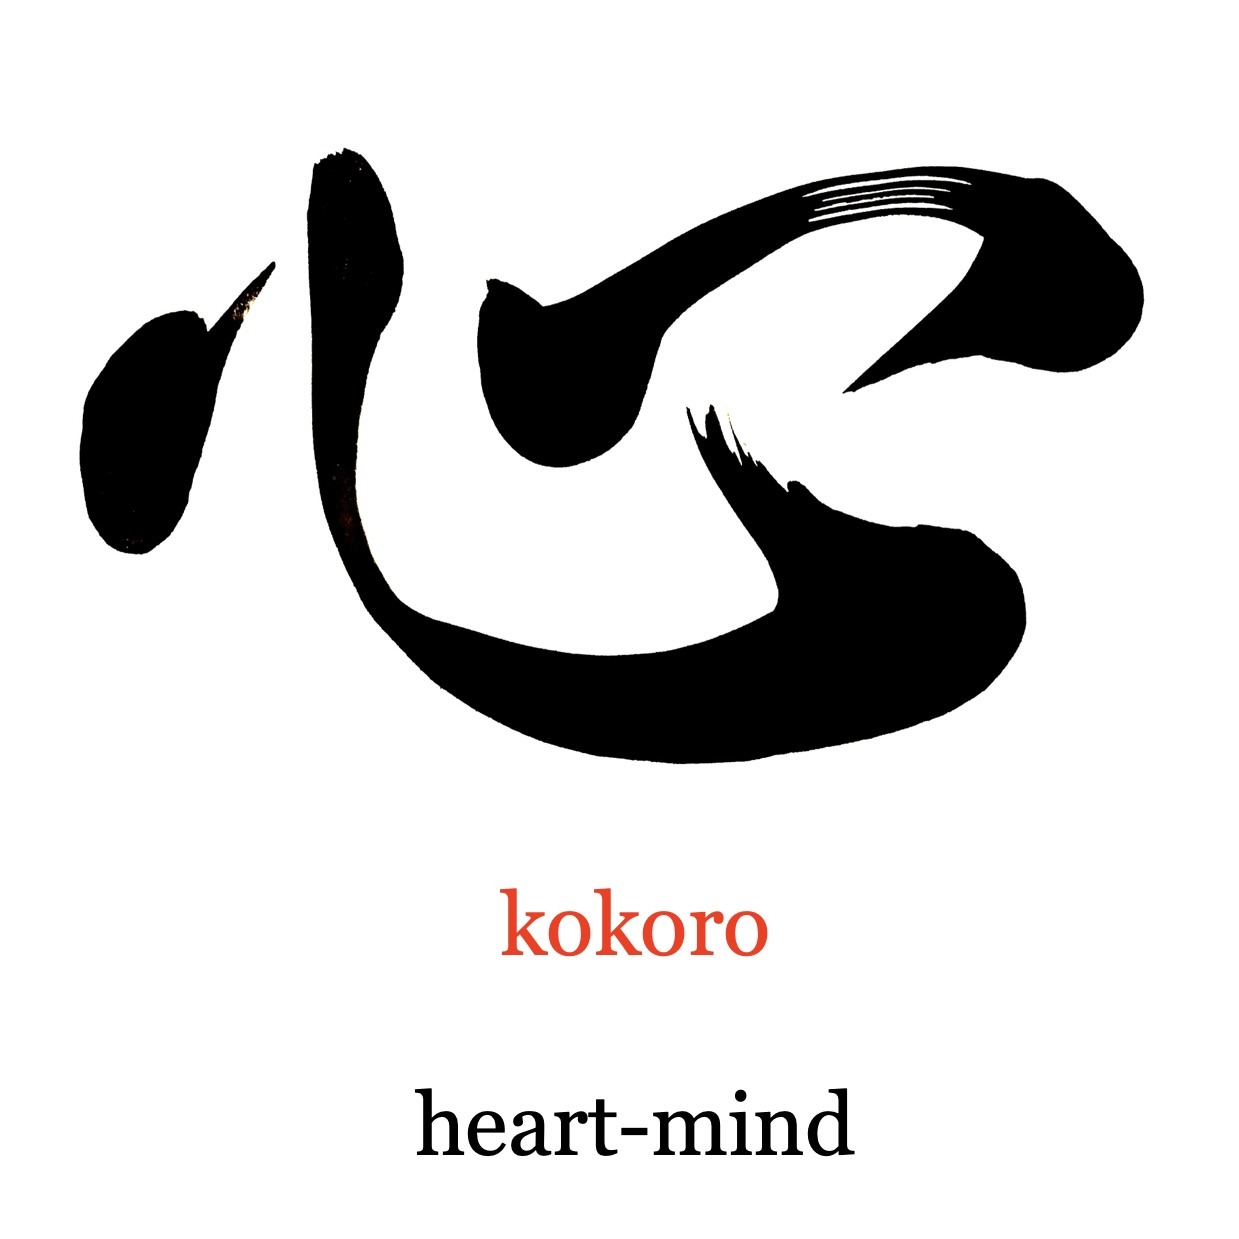 JapanWords — 心 (kokoro) heart-mind